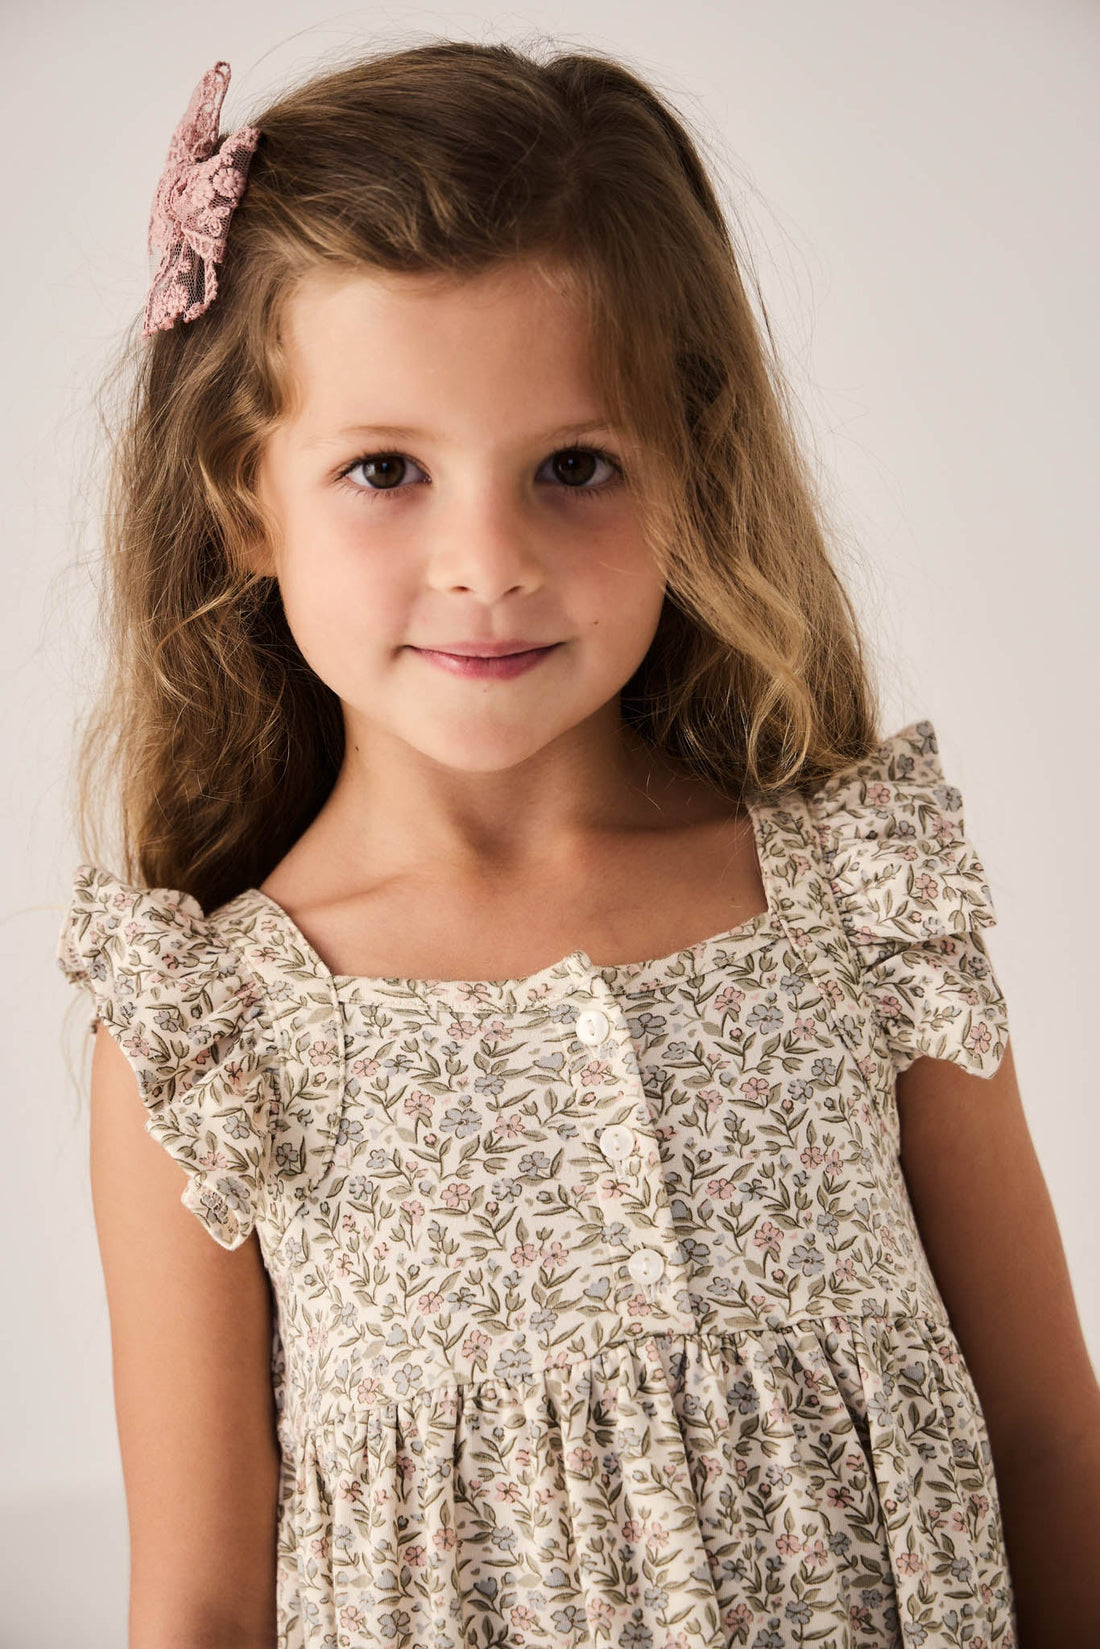 Organic Cotton Sienna Dress - Ariella Eggnog Childrens Dress from Jamie Kay USA